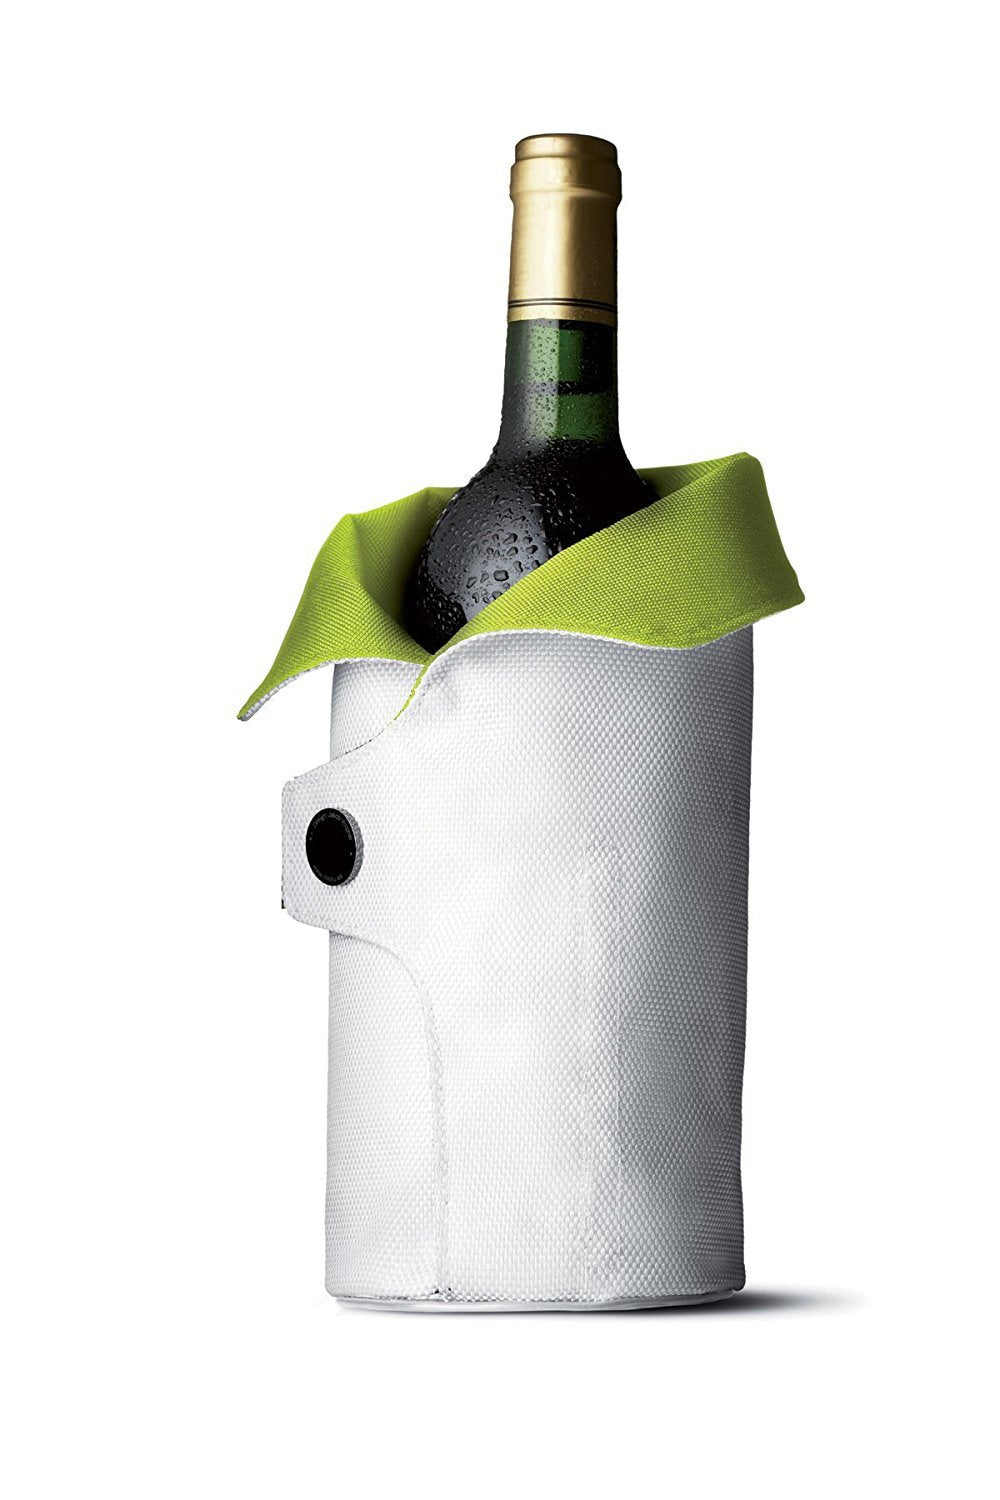 Menu Decanting Pourer & Celsius Wine Thermometer - Vignon style